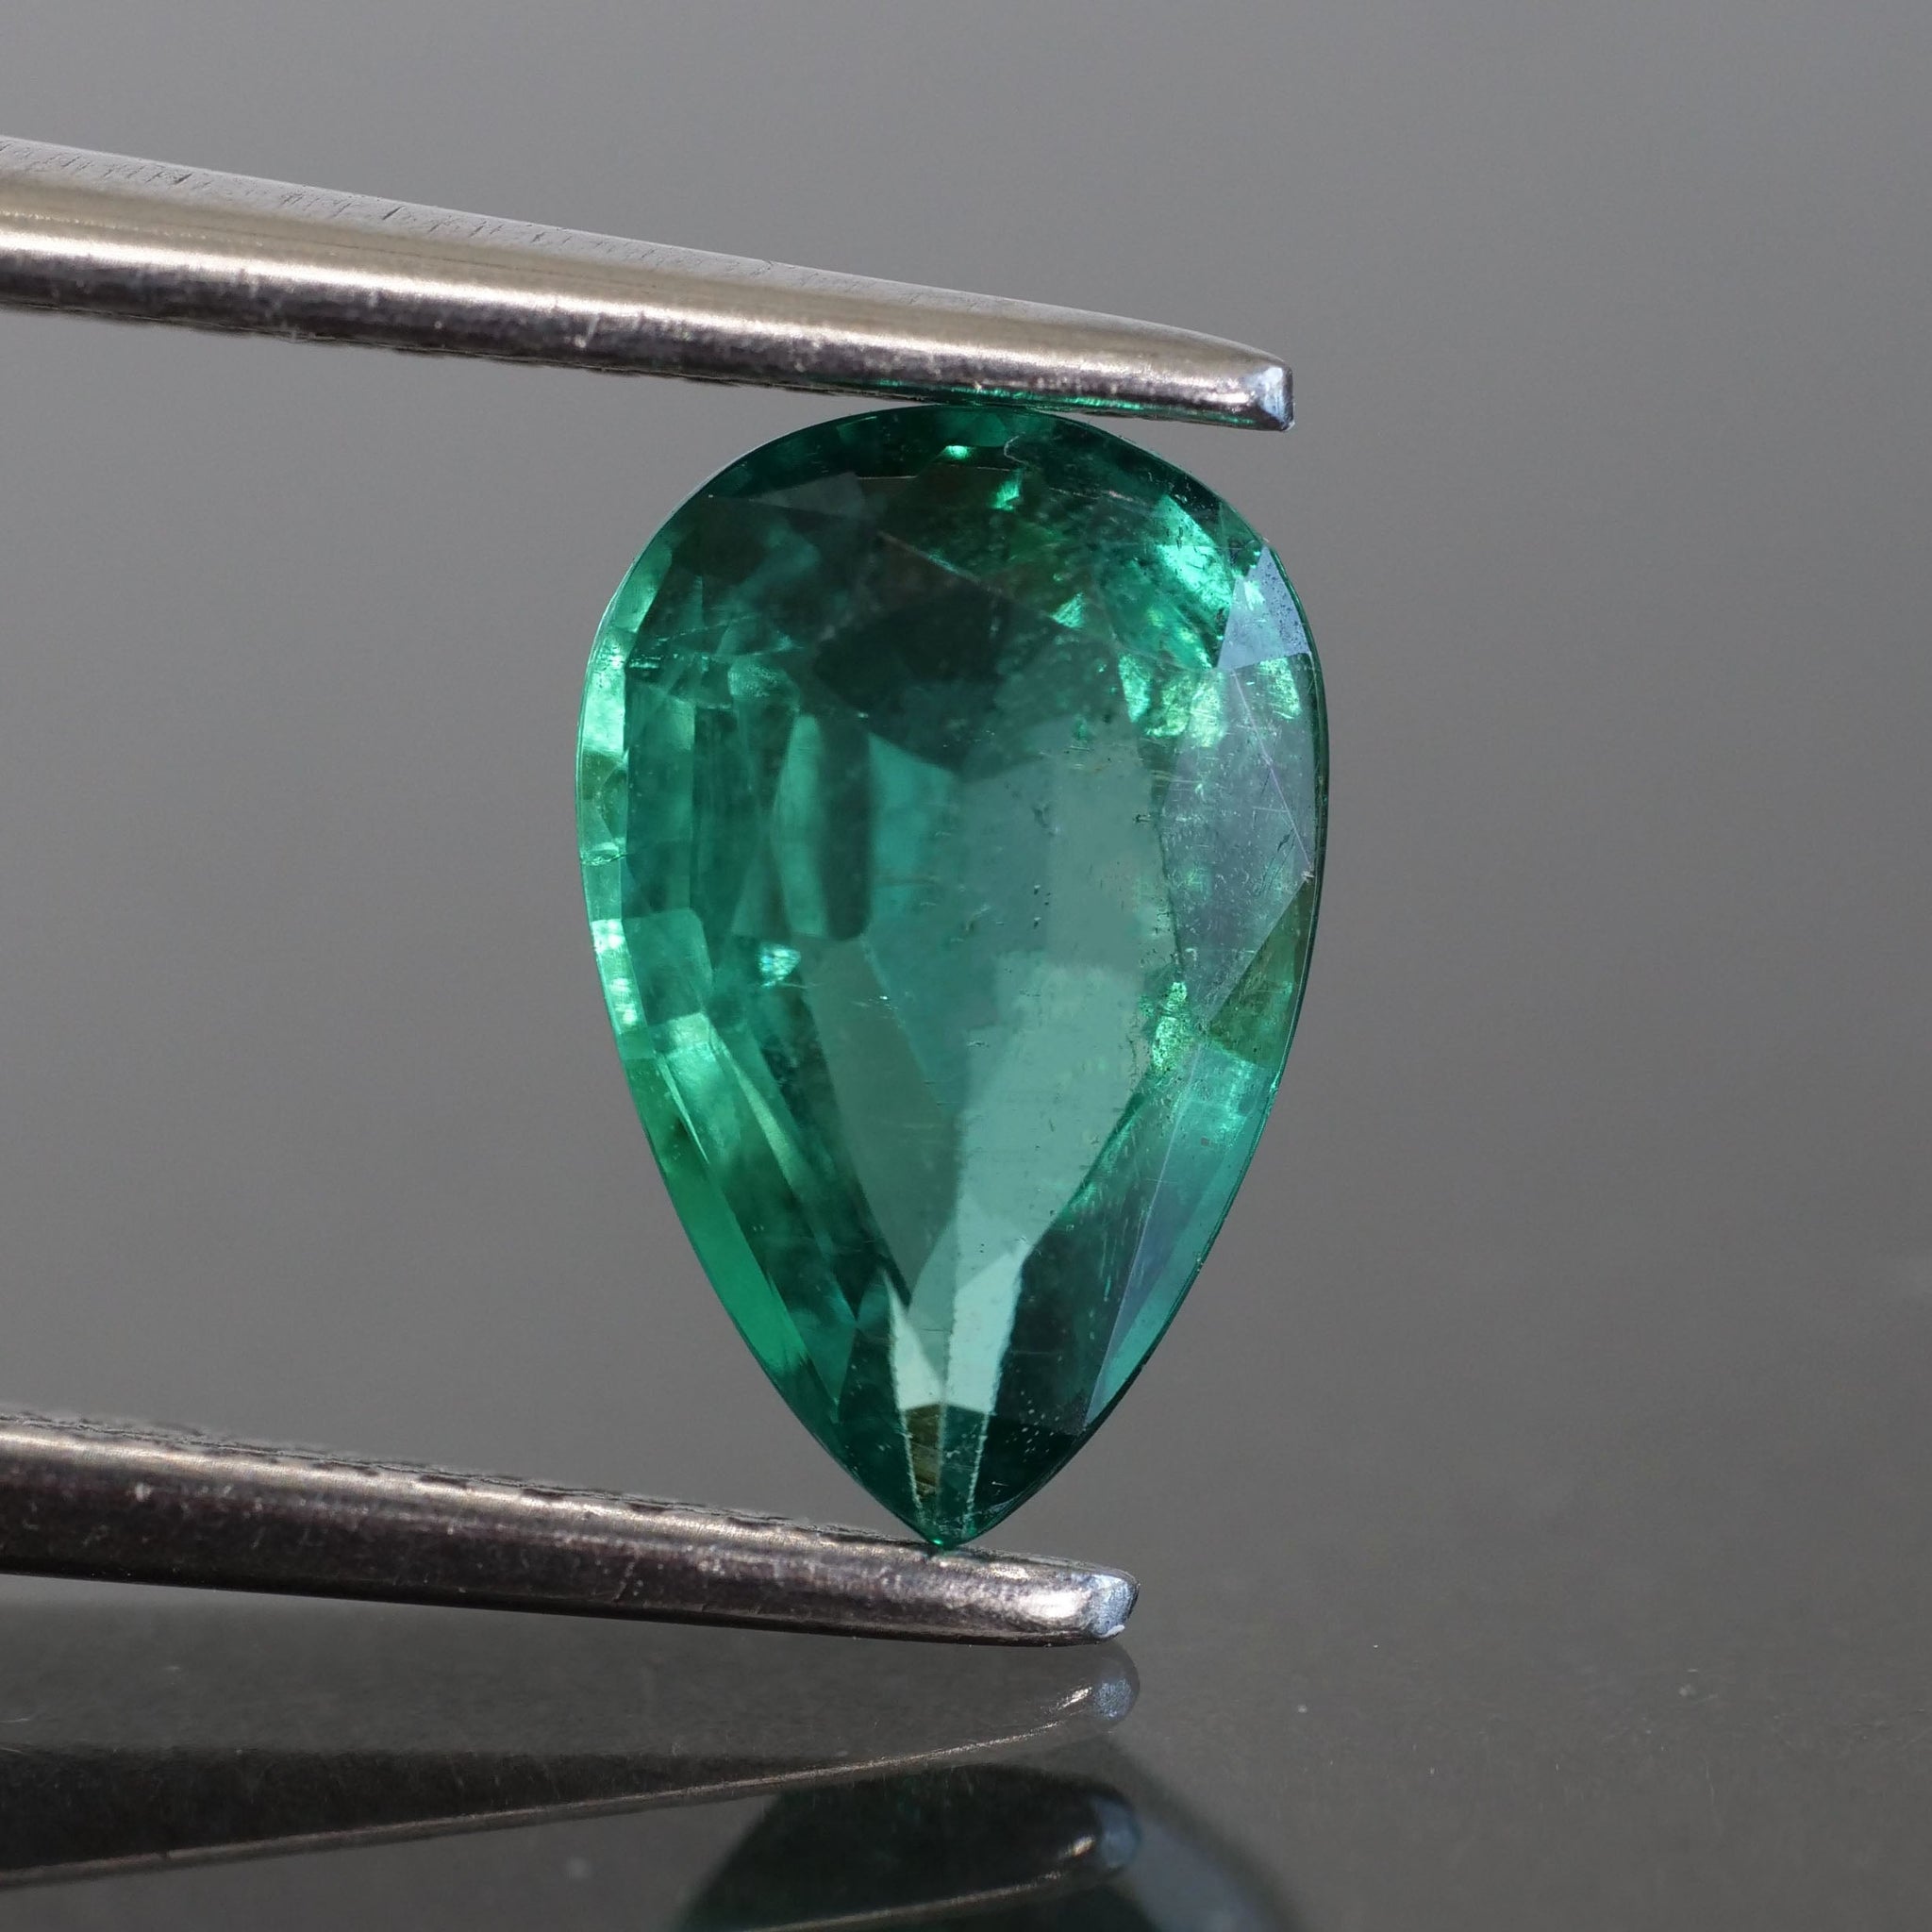 Emerald | natural, green, 9x6mm, AAAA quality, Zambia 1.22ct - Eden Garden Jewelry™